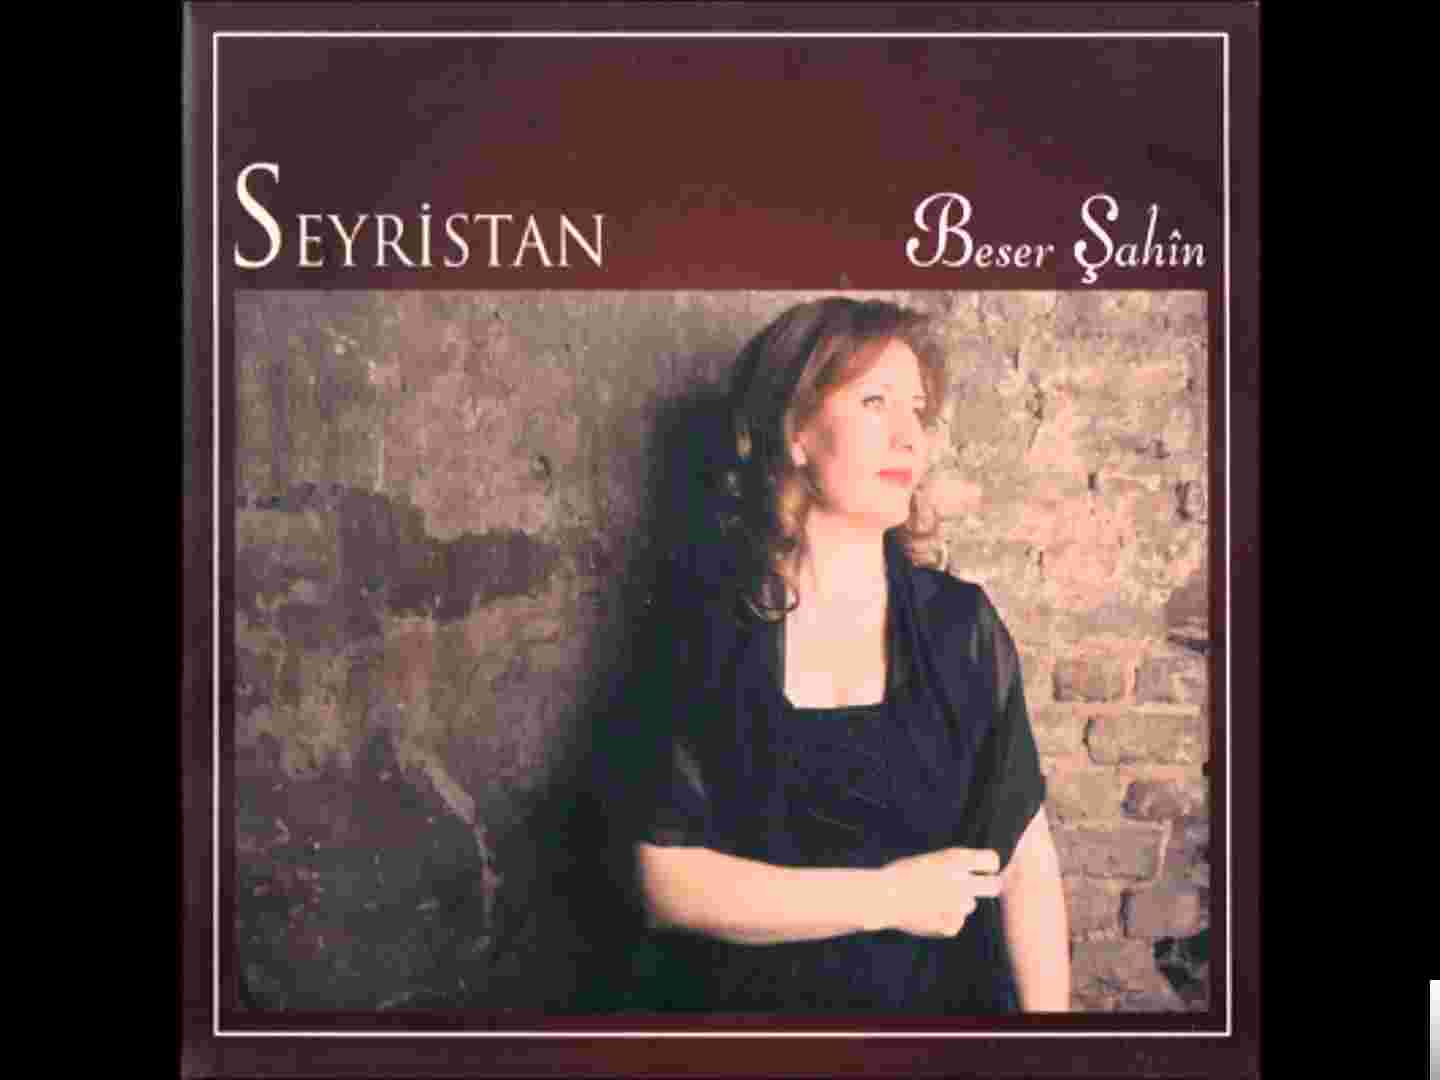 Beser Şahin Seyristan (2010)